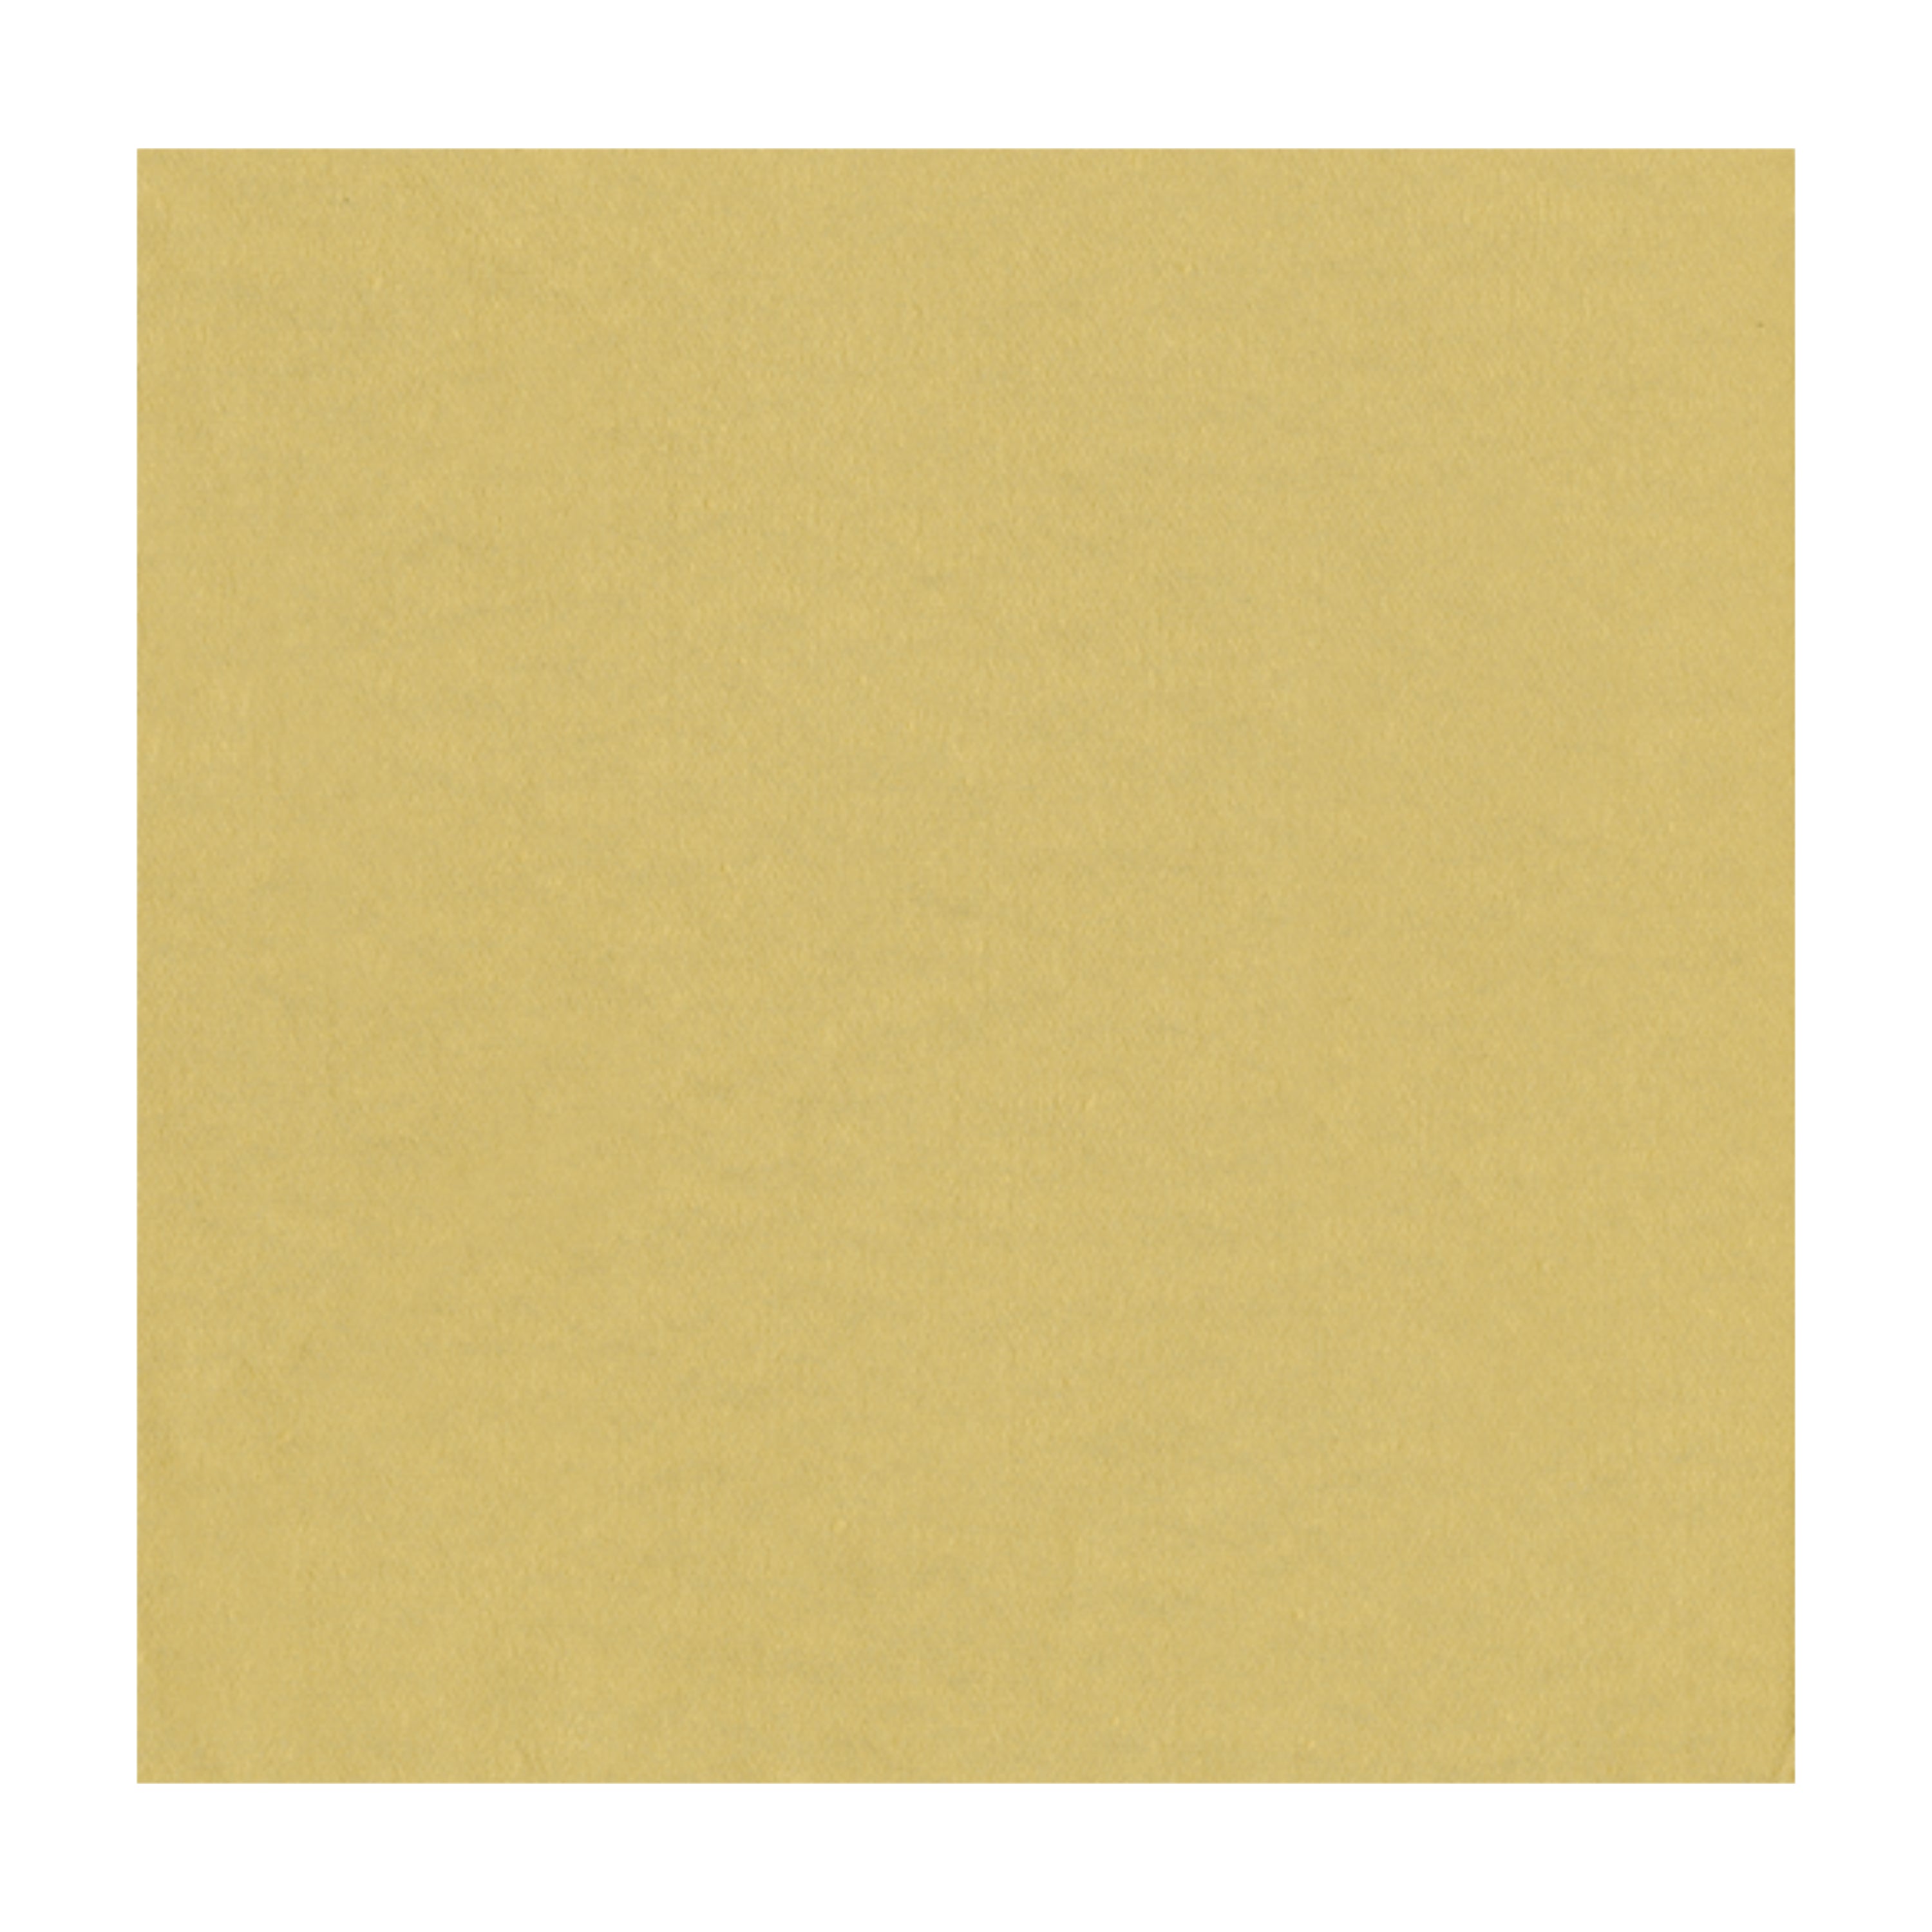 Caspari Paper Linen Solid Gold Dinner Napkins - 12pk